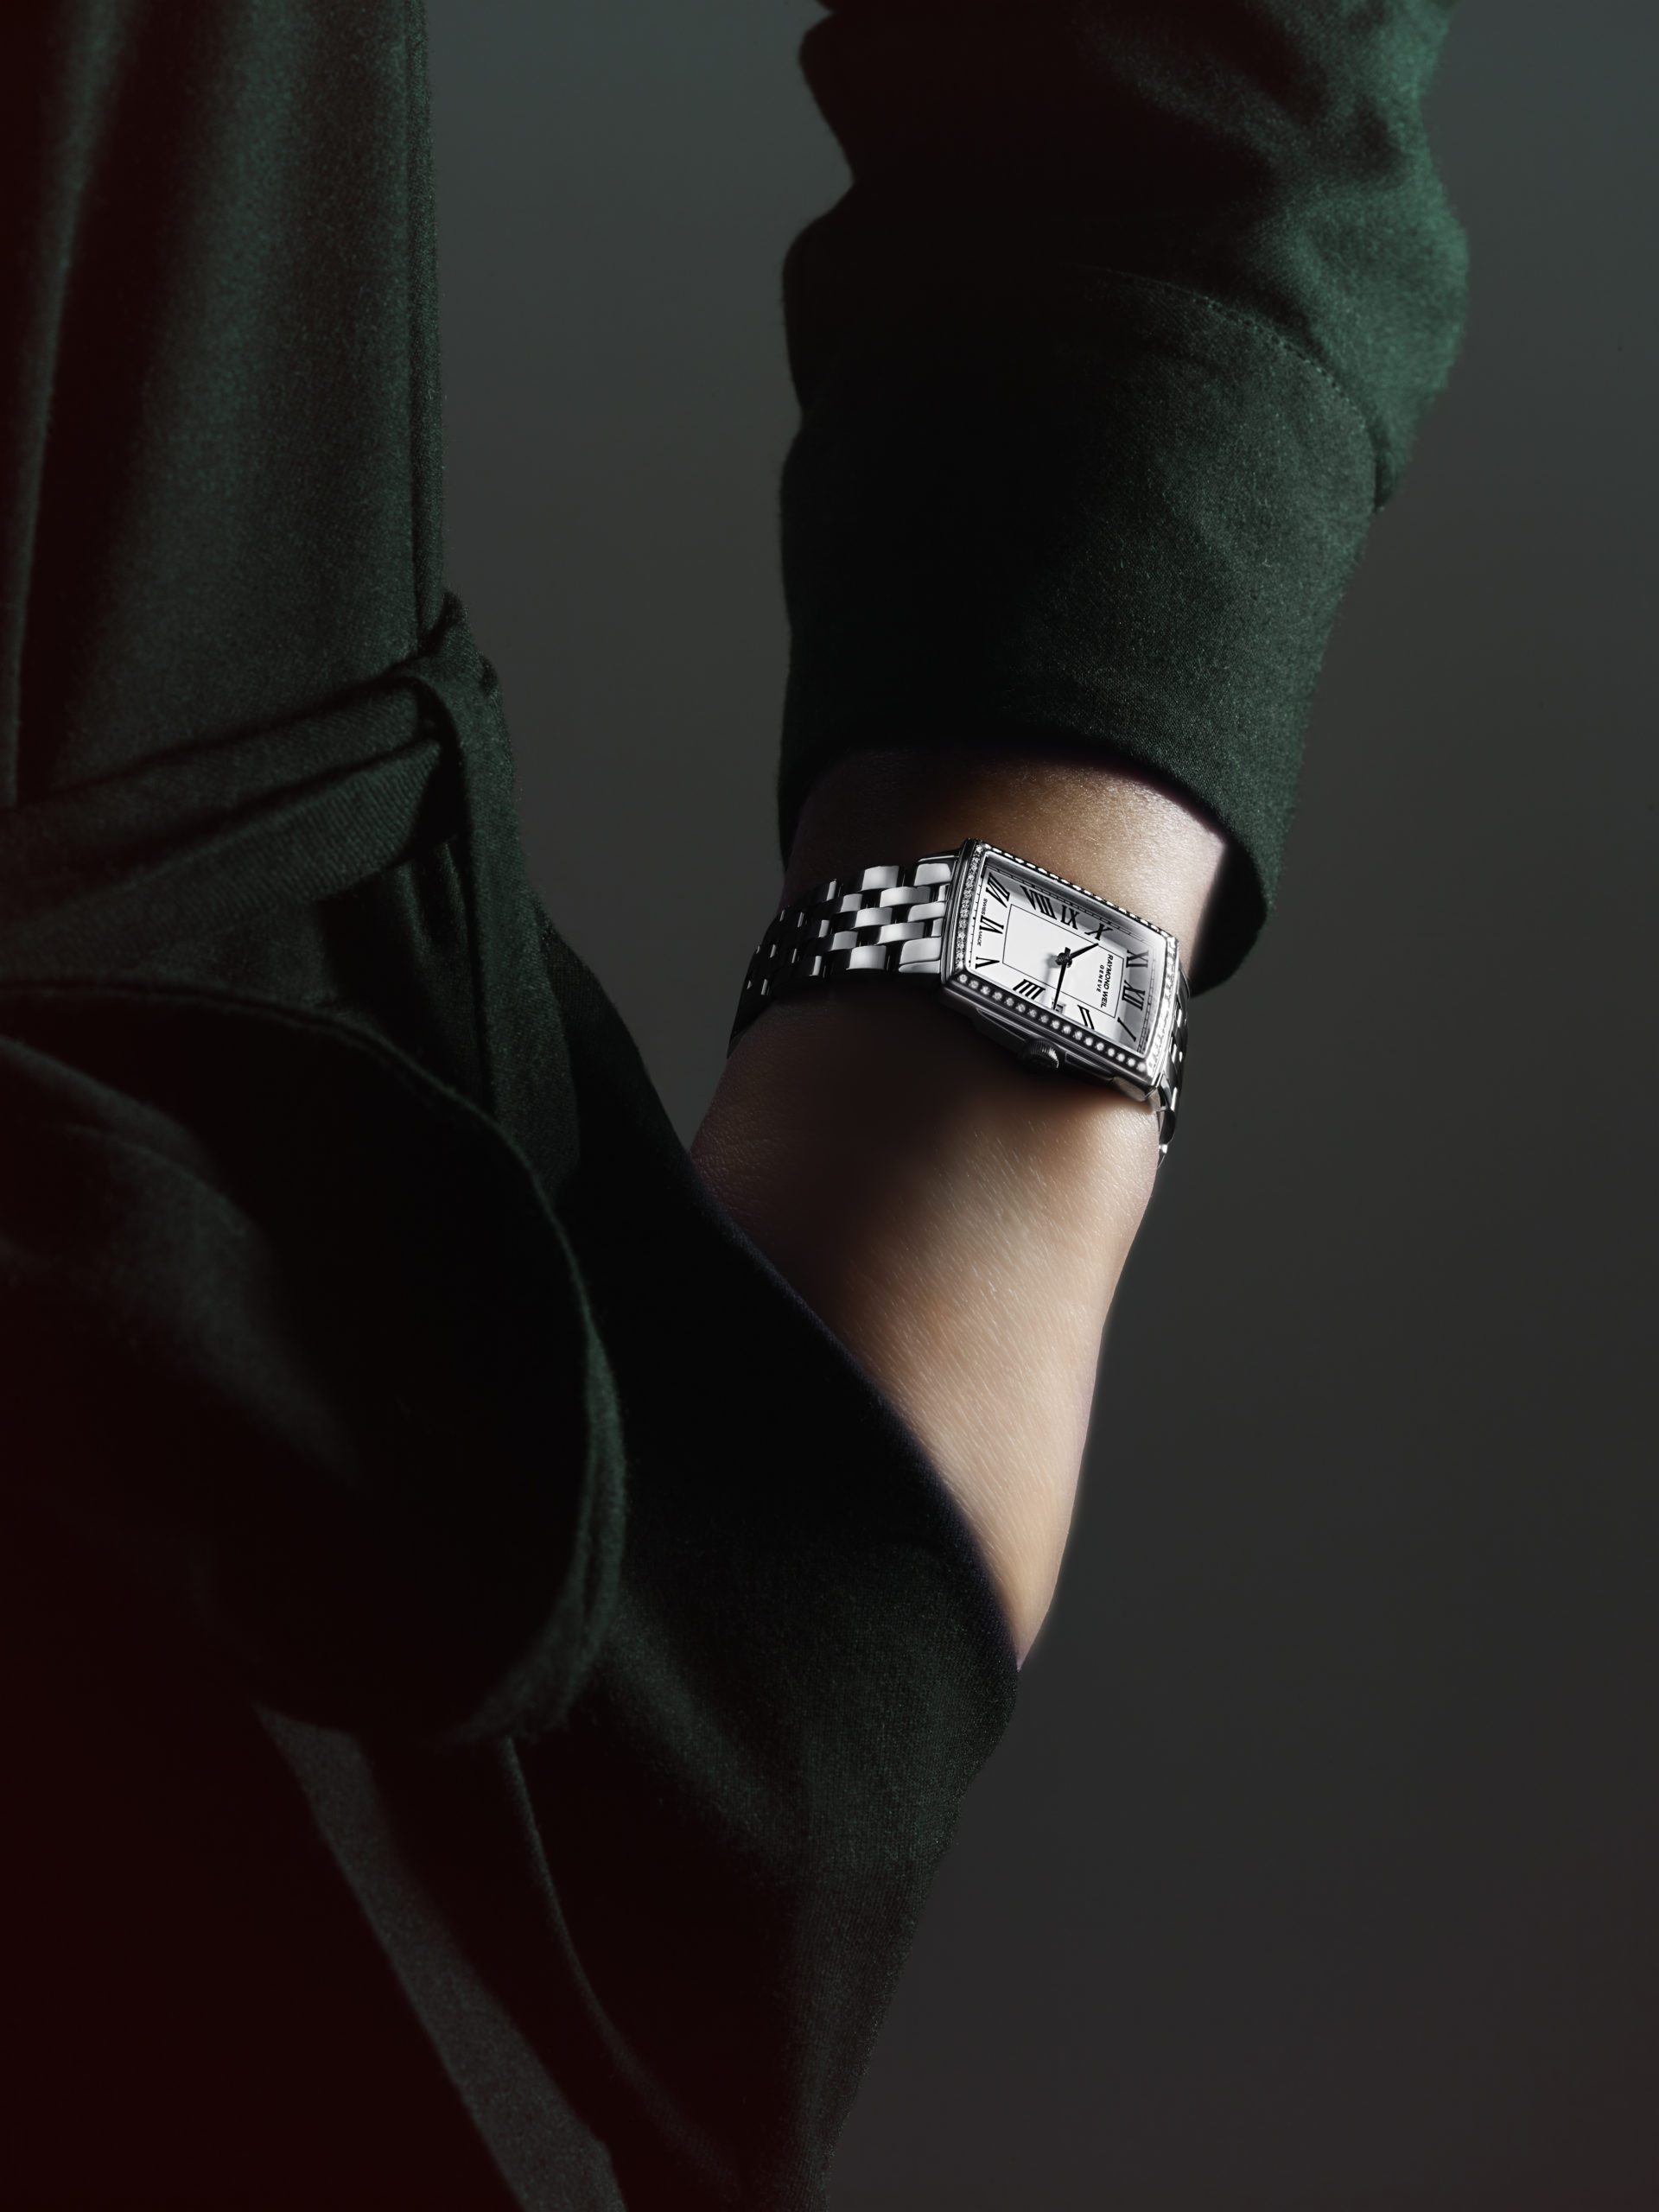 Men's Gold Bracelet Watch with Geniune Diamond Markers - Peugeot Watches